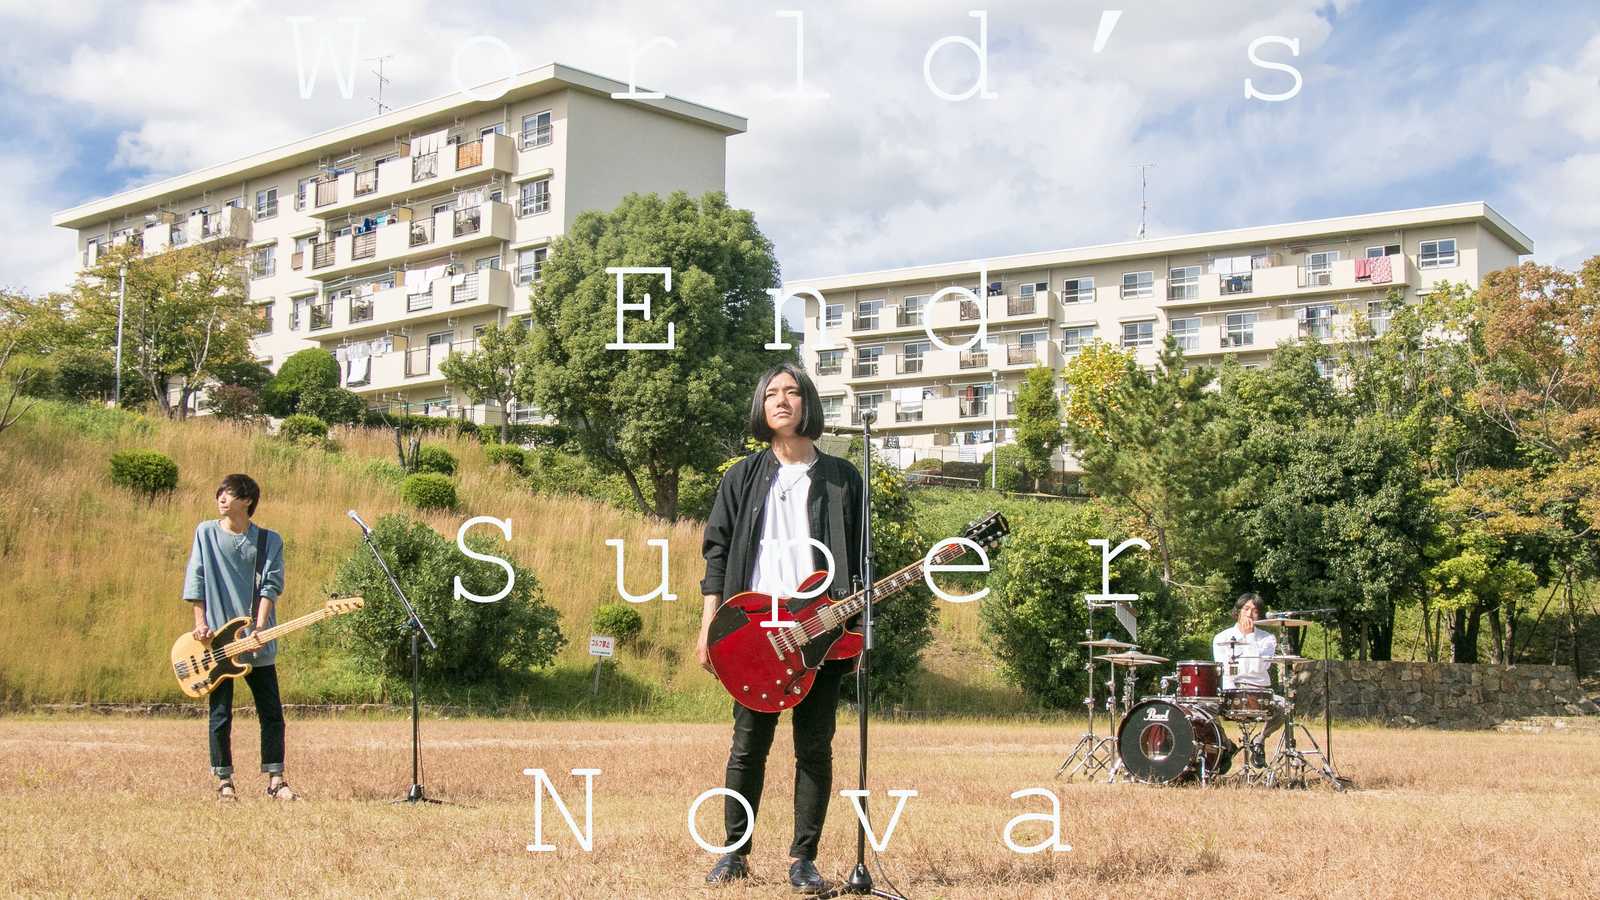 Nuevo mini álbum de World's End Super Nova © World's End Super Nova. All rights reserved.